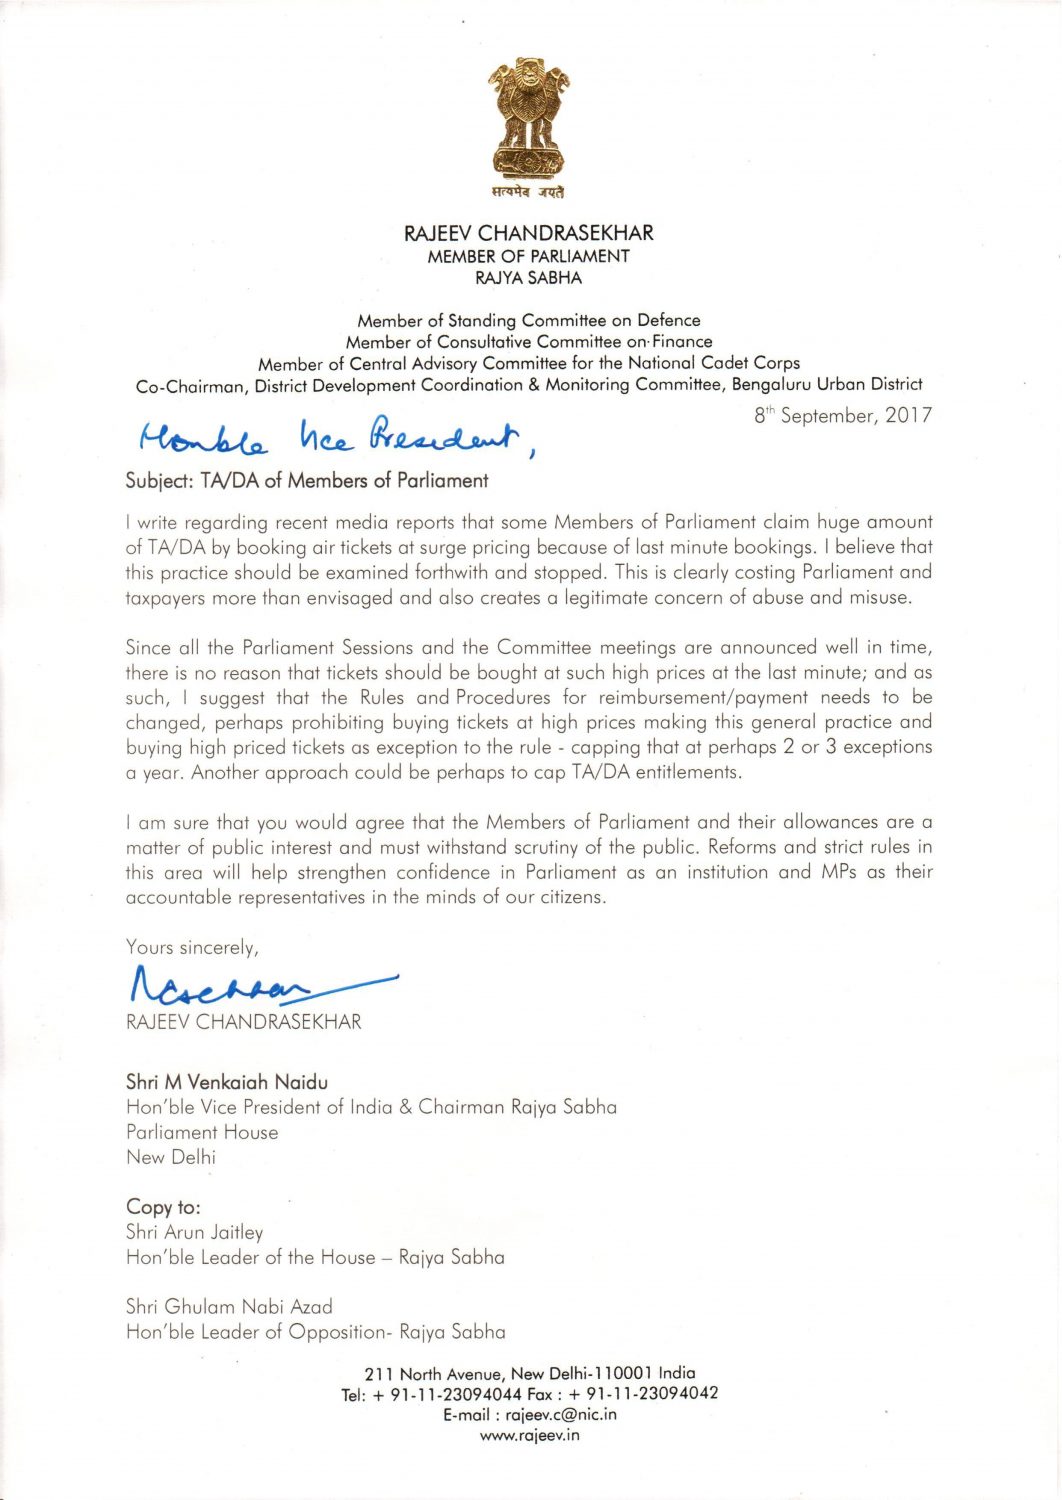 Rajeev writes to Vice President of India regarding TA/DA Members